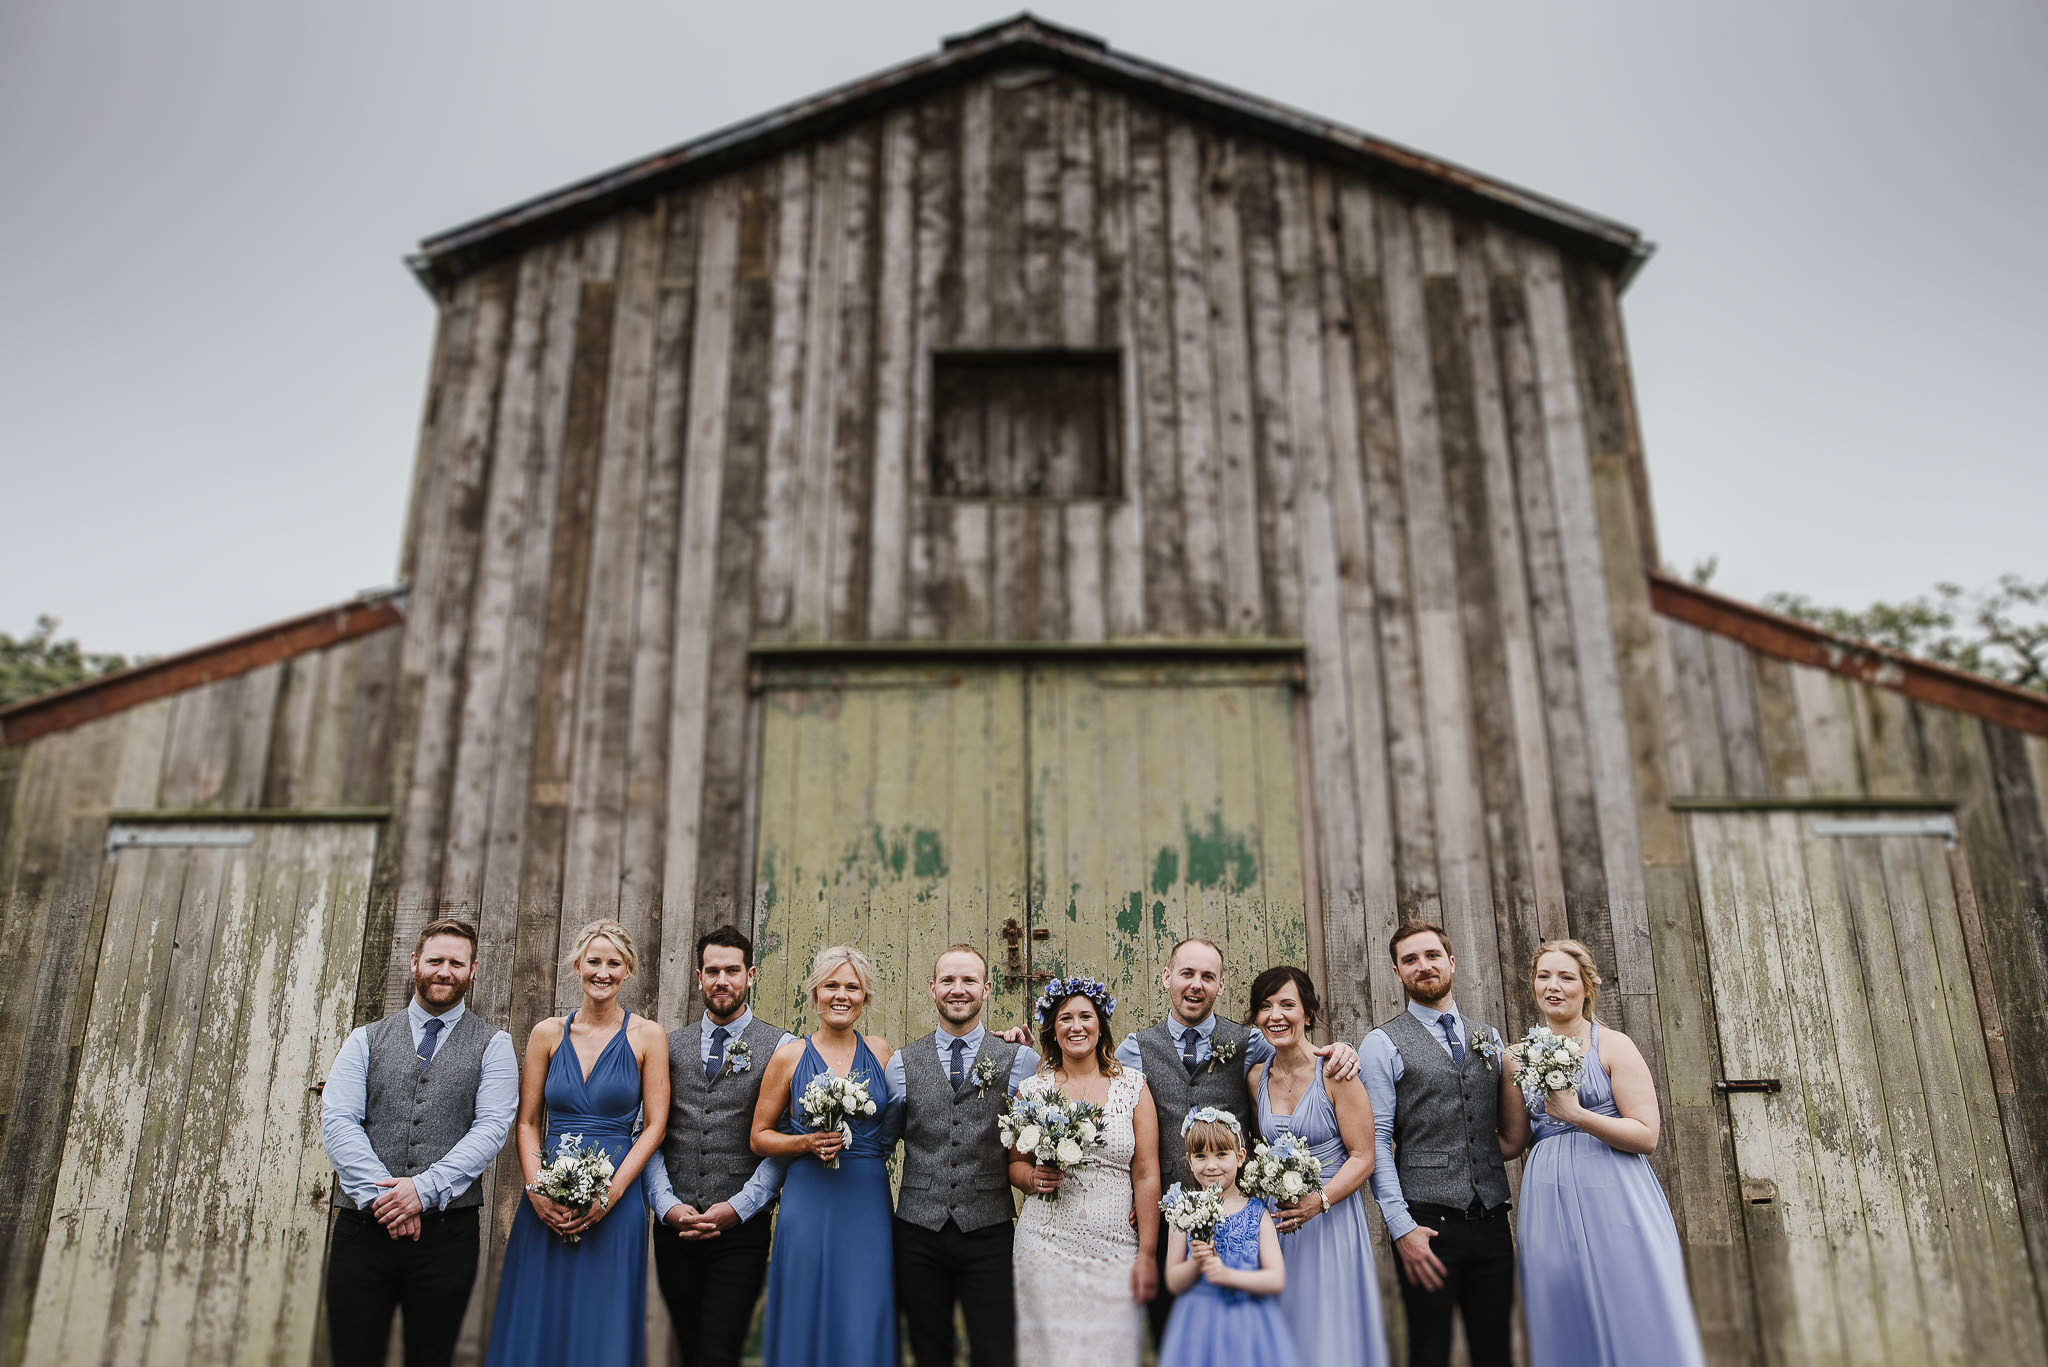 BEST-WEDDING-PHOTOGRAPHER-CORNWALL-2018-99.jpg